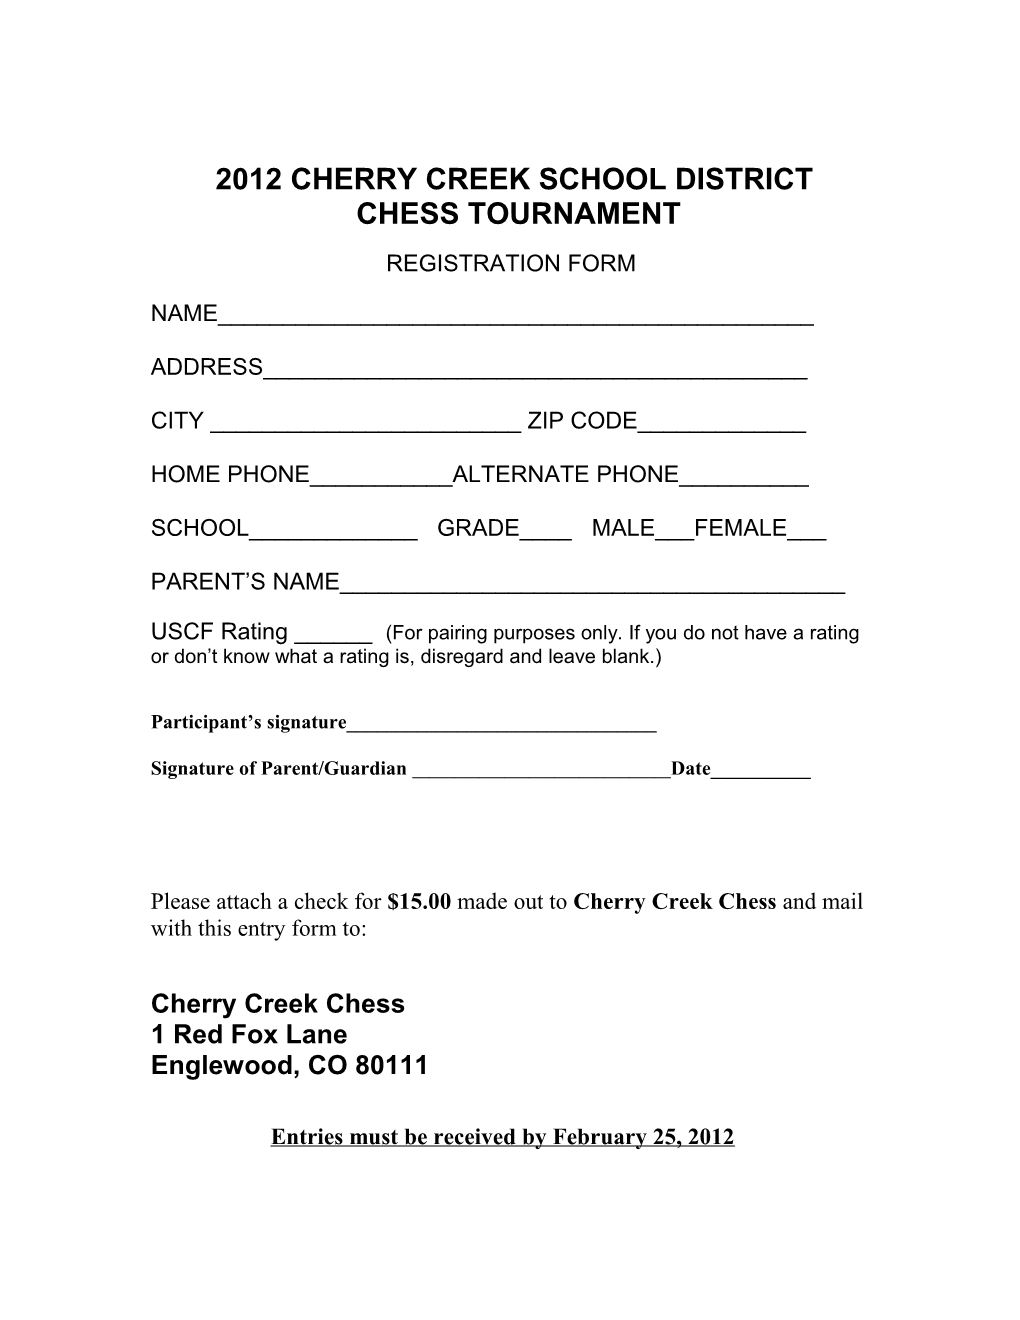 Cherry Creek District Chess Tournament